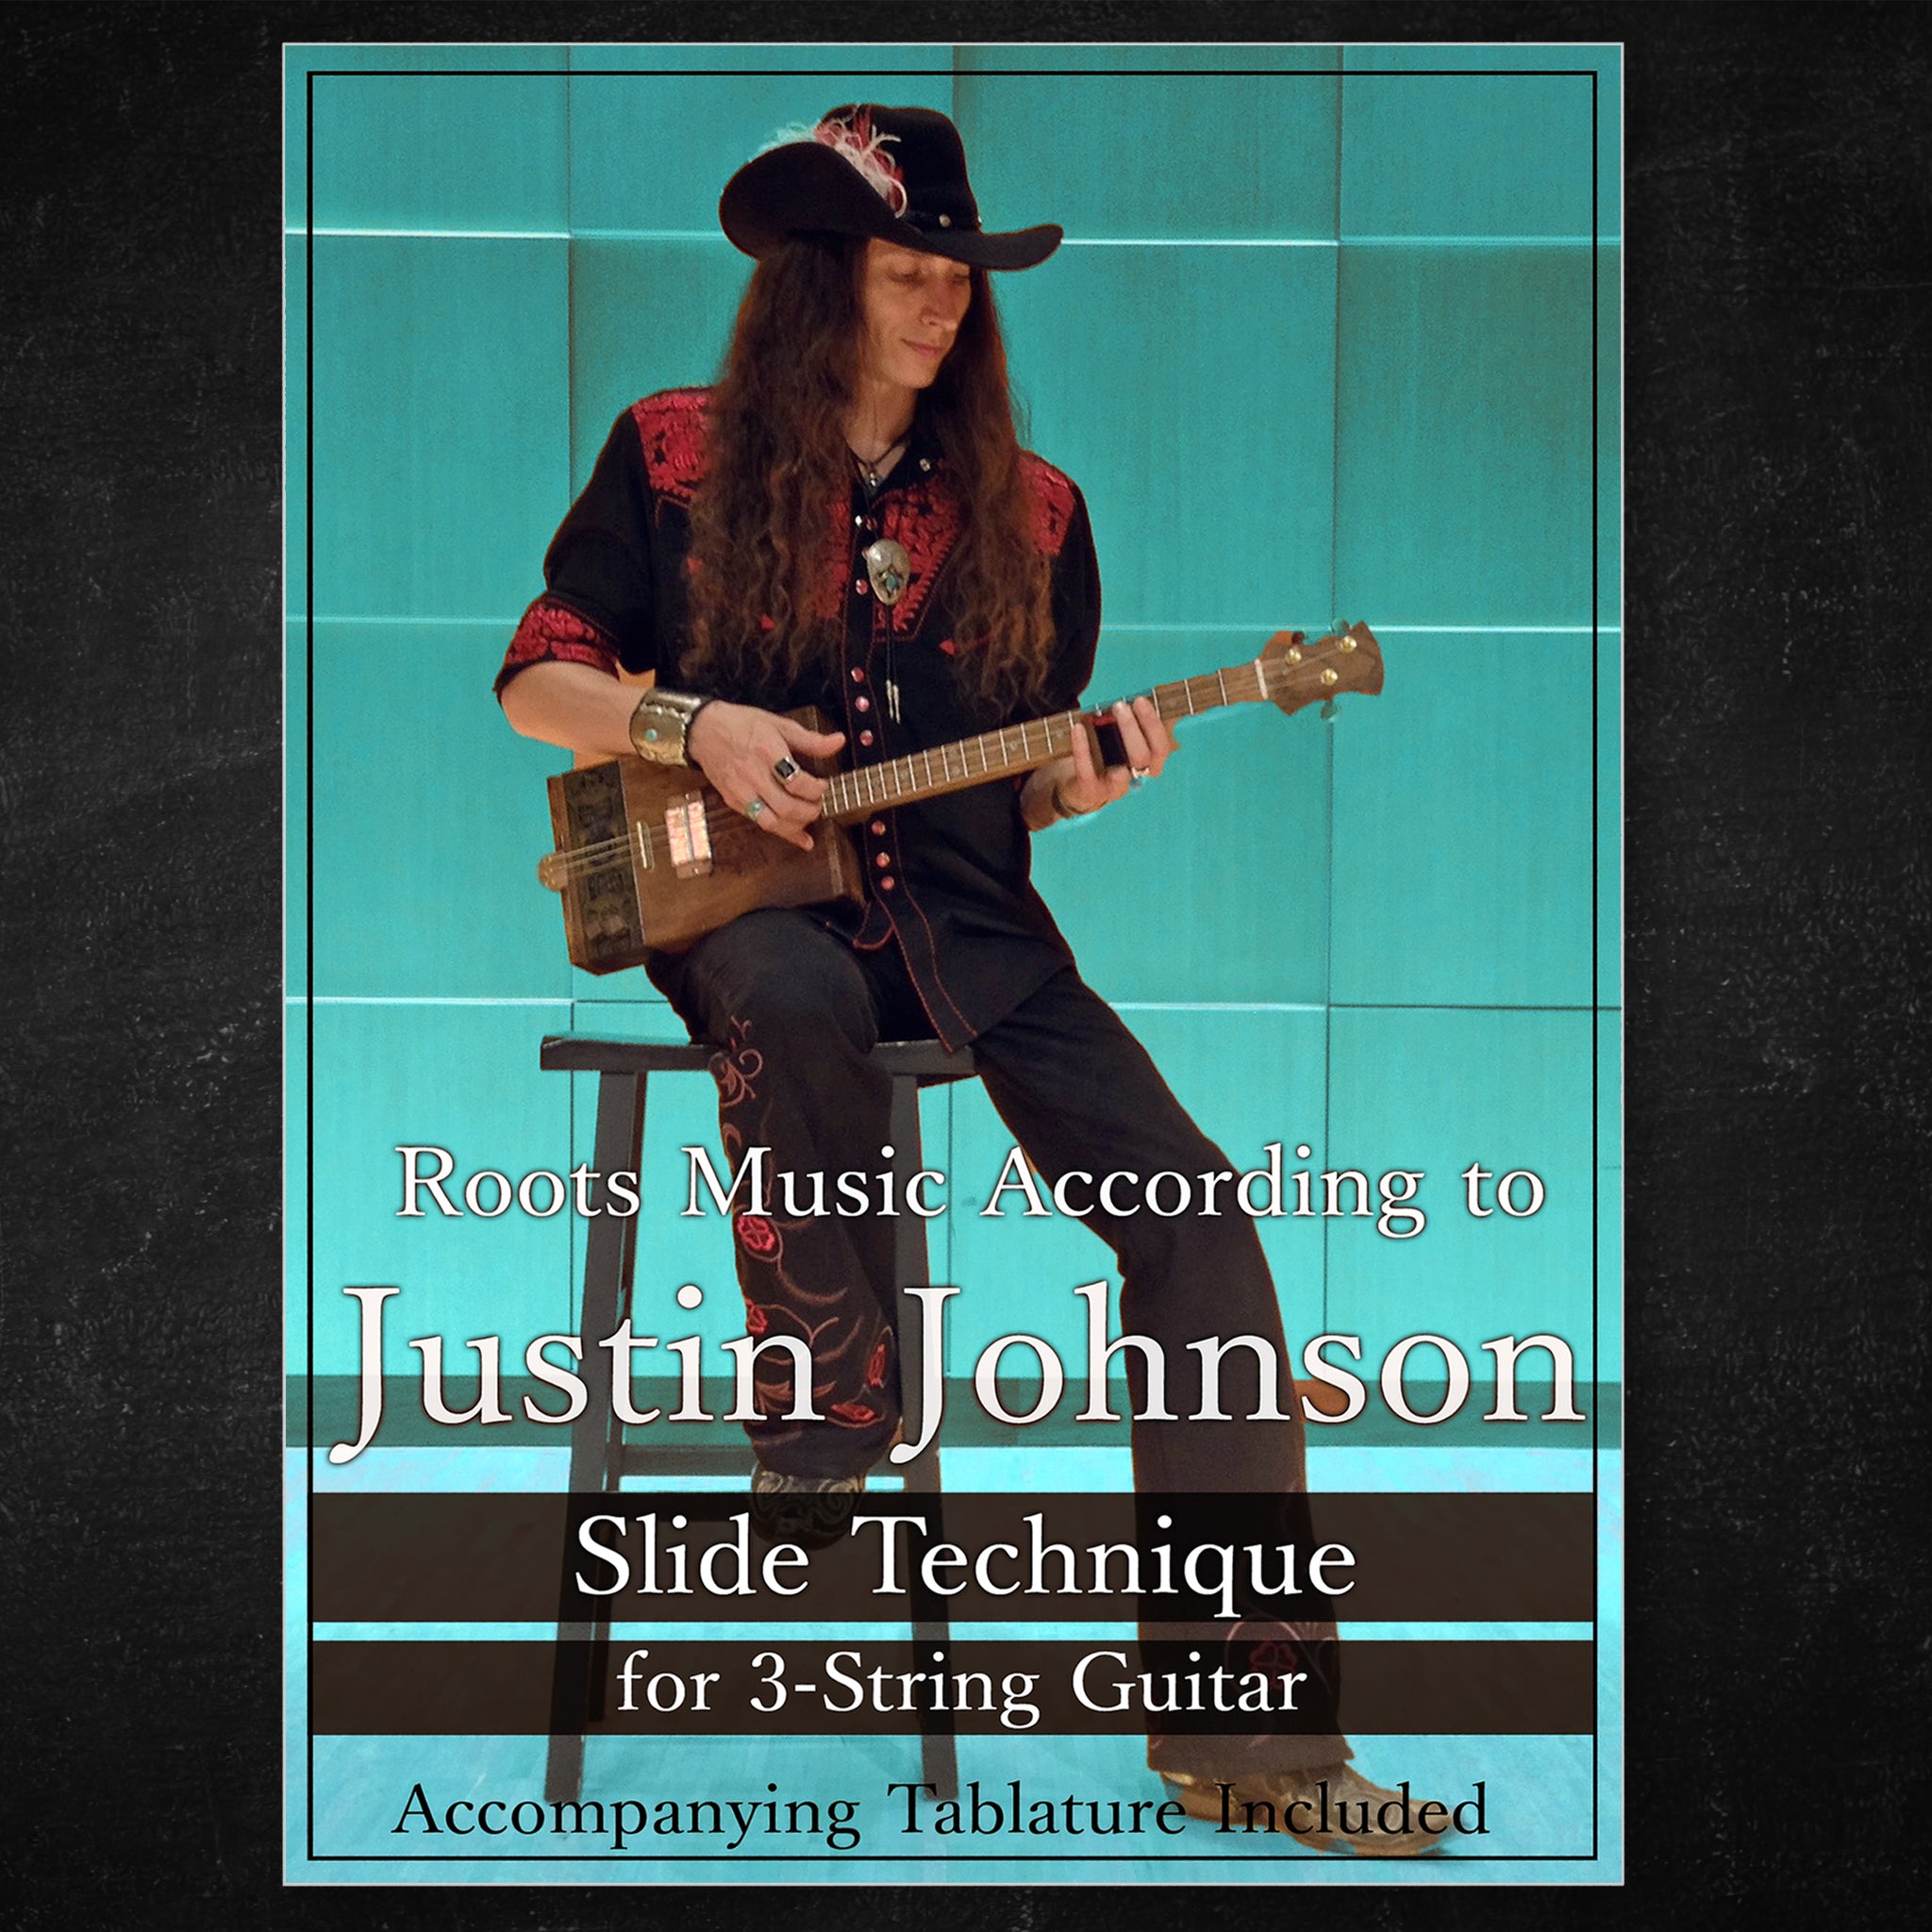 "Slide Technique for 3-String Guitar" Guitar Lesson Video Course